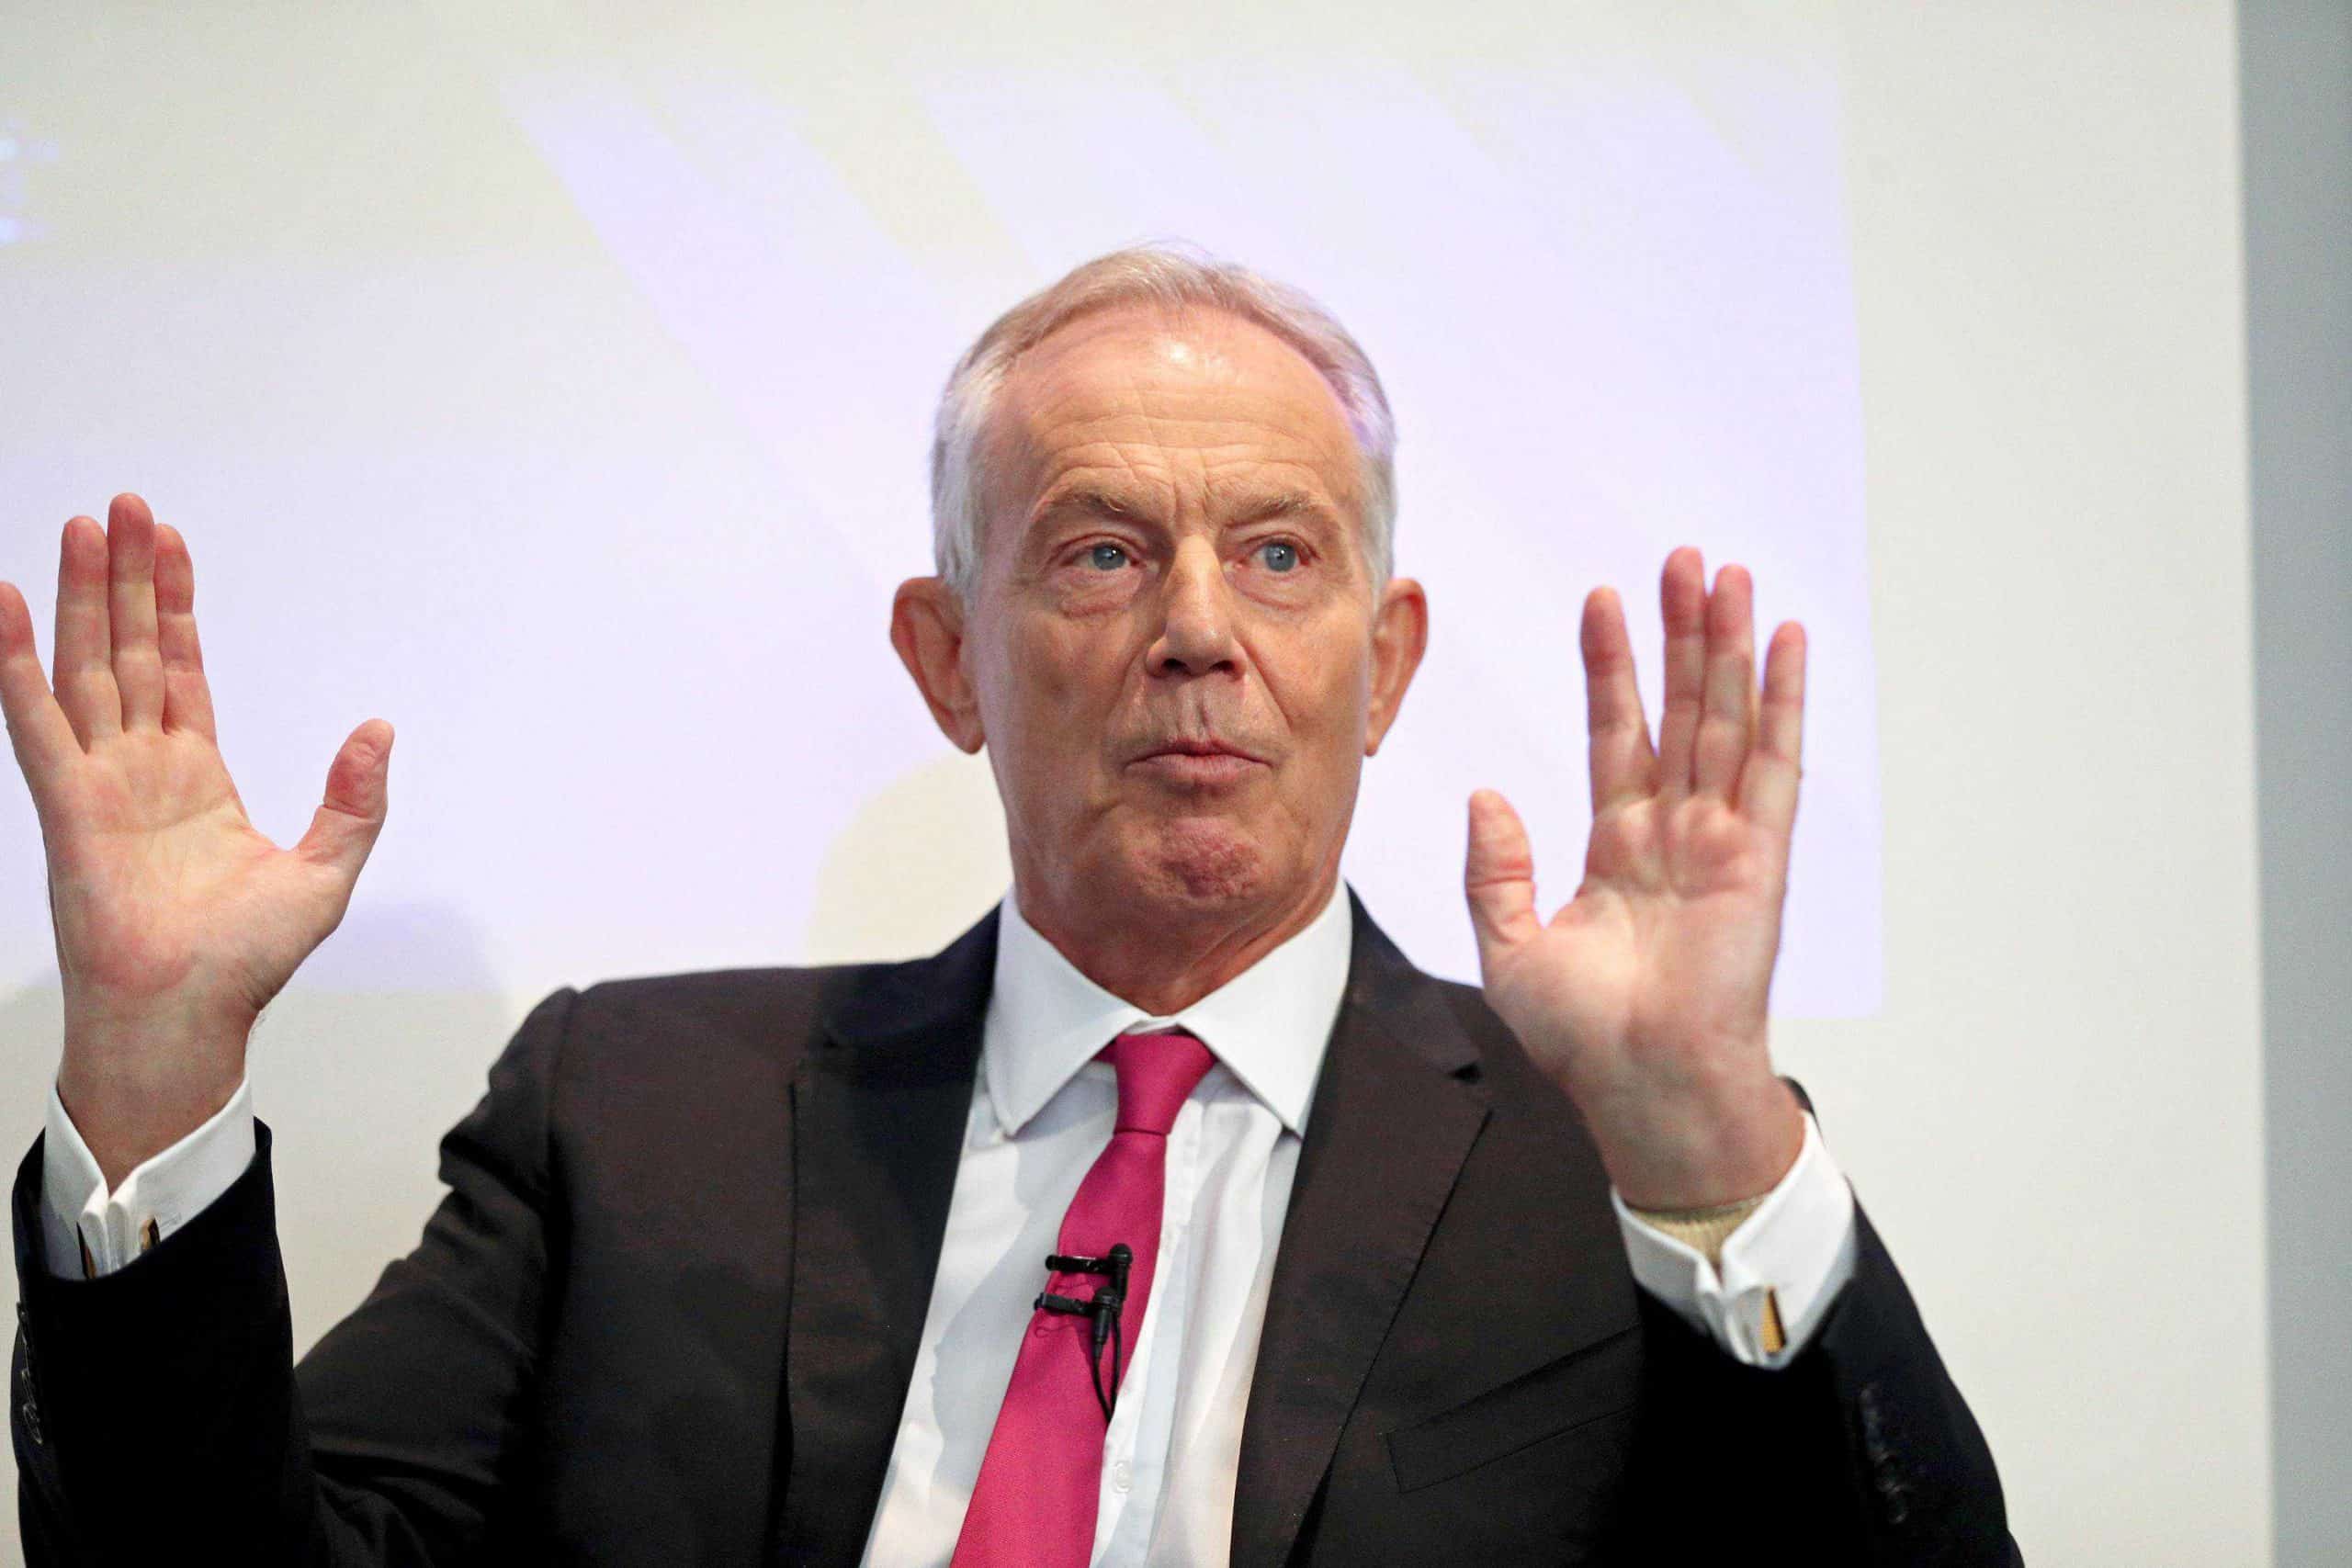 Tony Blair praises Jeremy Corbyn’s handling of Brexit